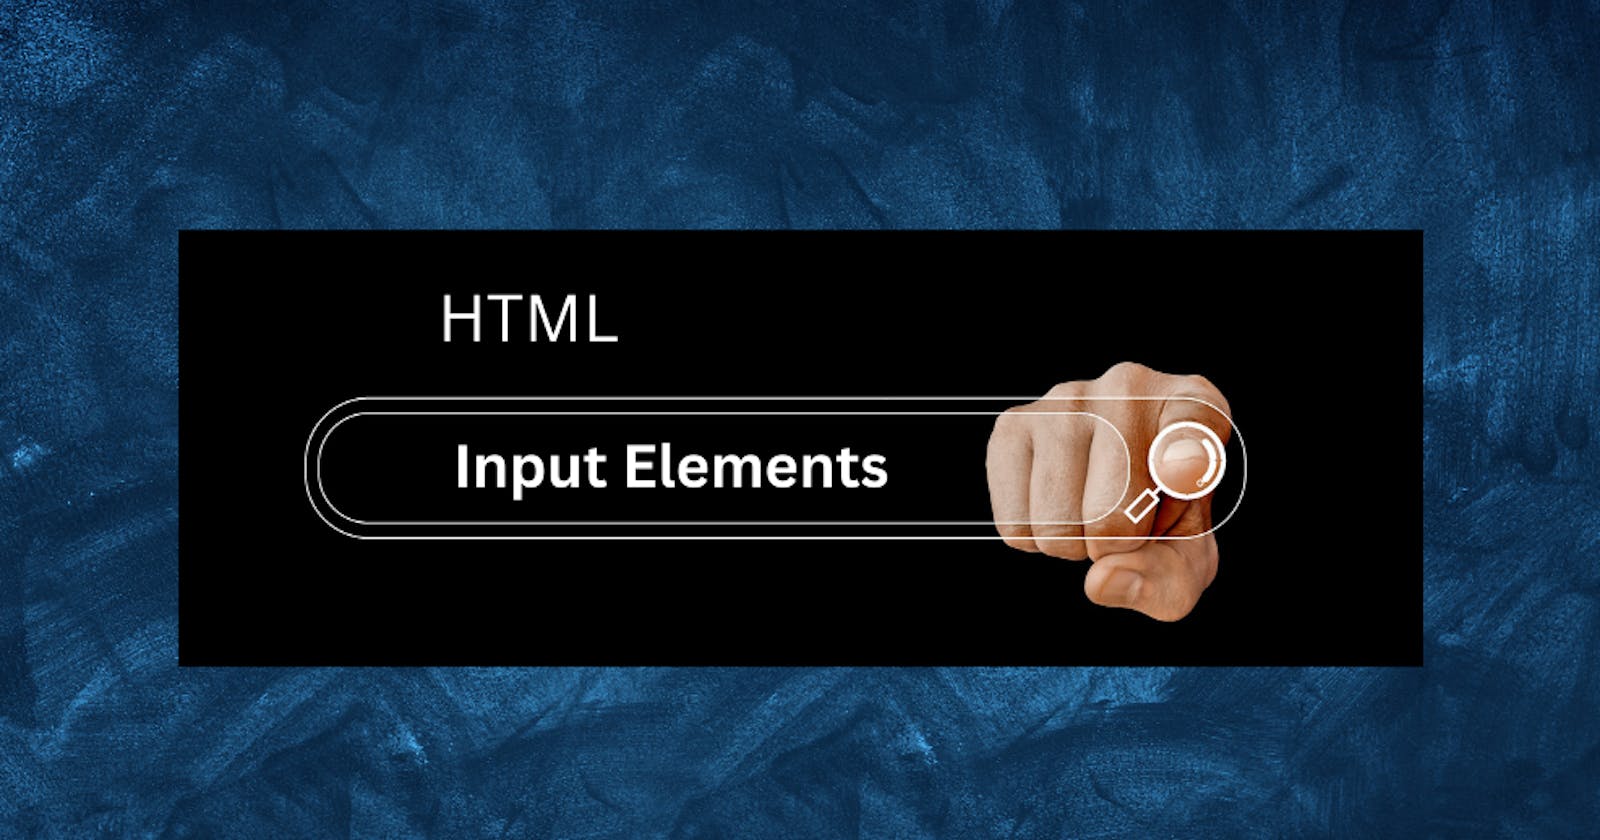 Input Elements